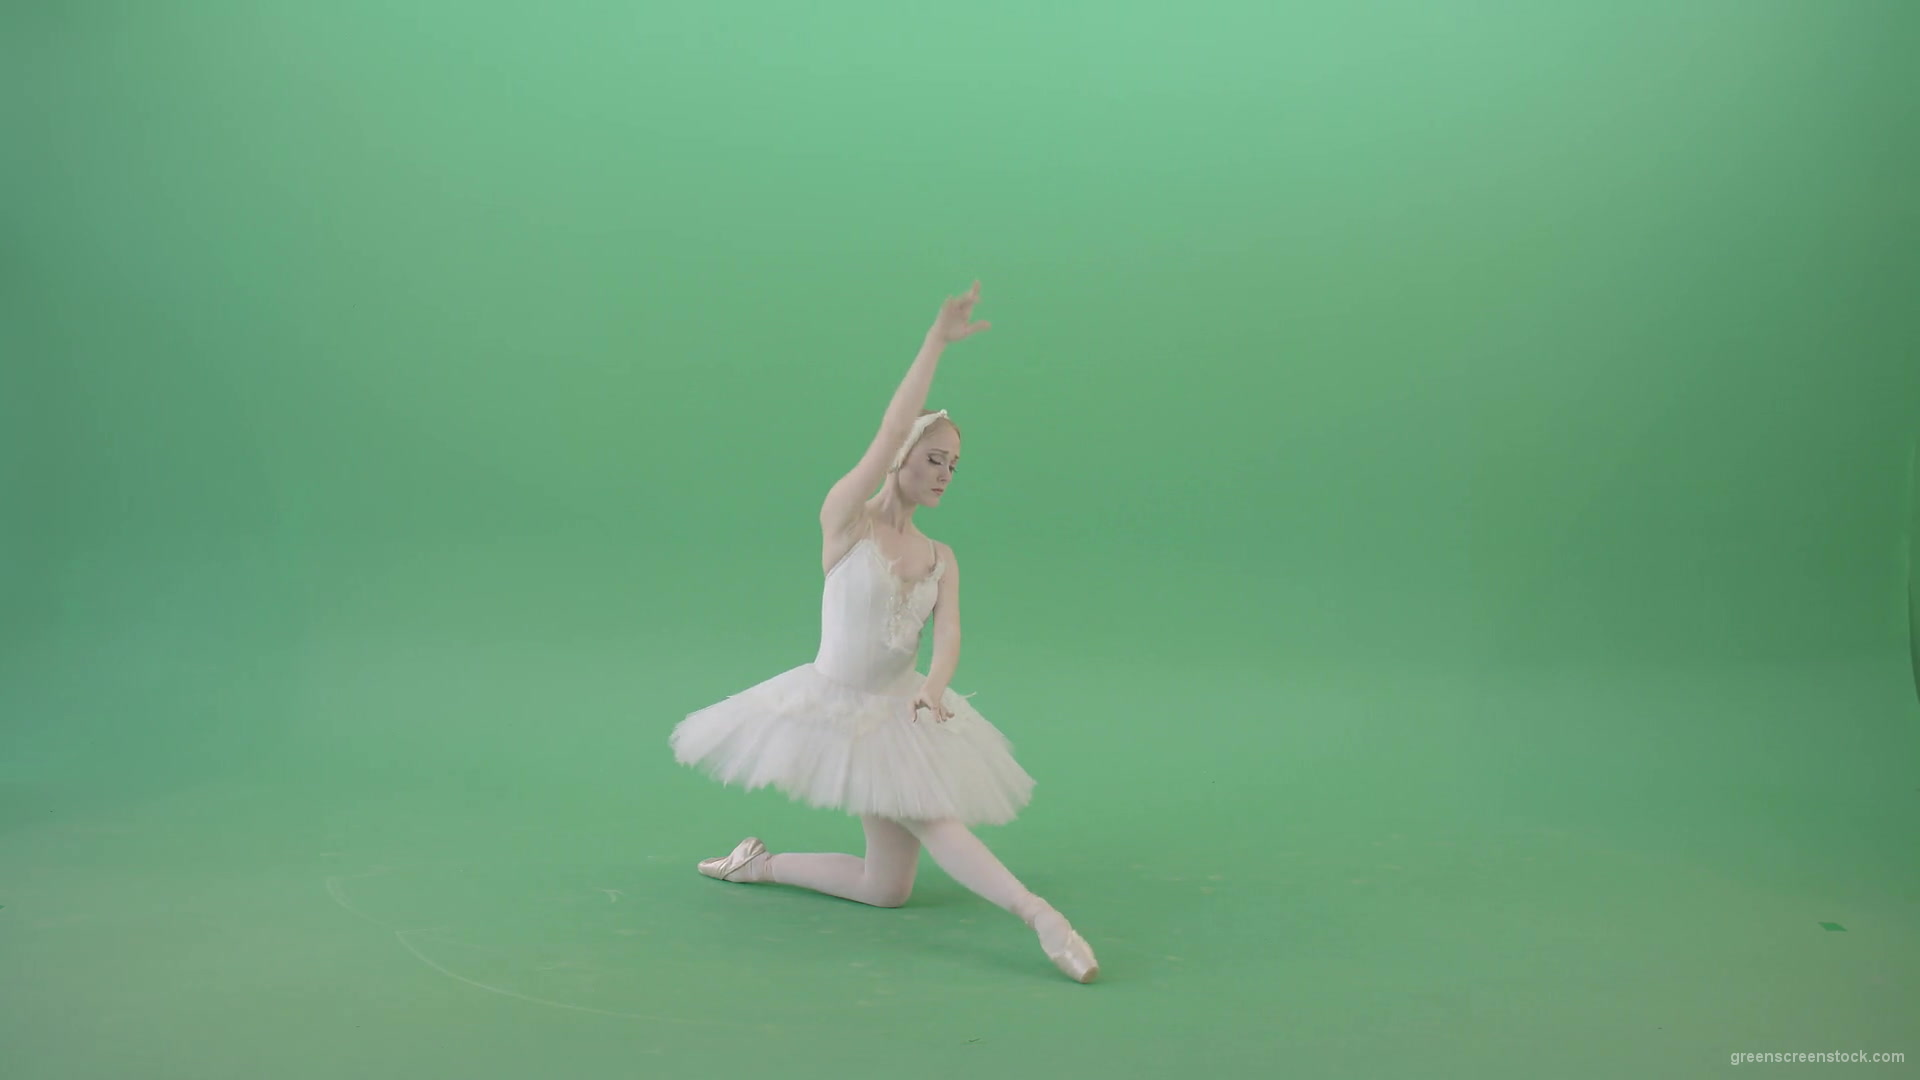 Flying-swan-laken-ballerina-dancing-with-light-on-green-screen-chroma-key-4K-Video-Footage-1920_006 Green Screen Stock